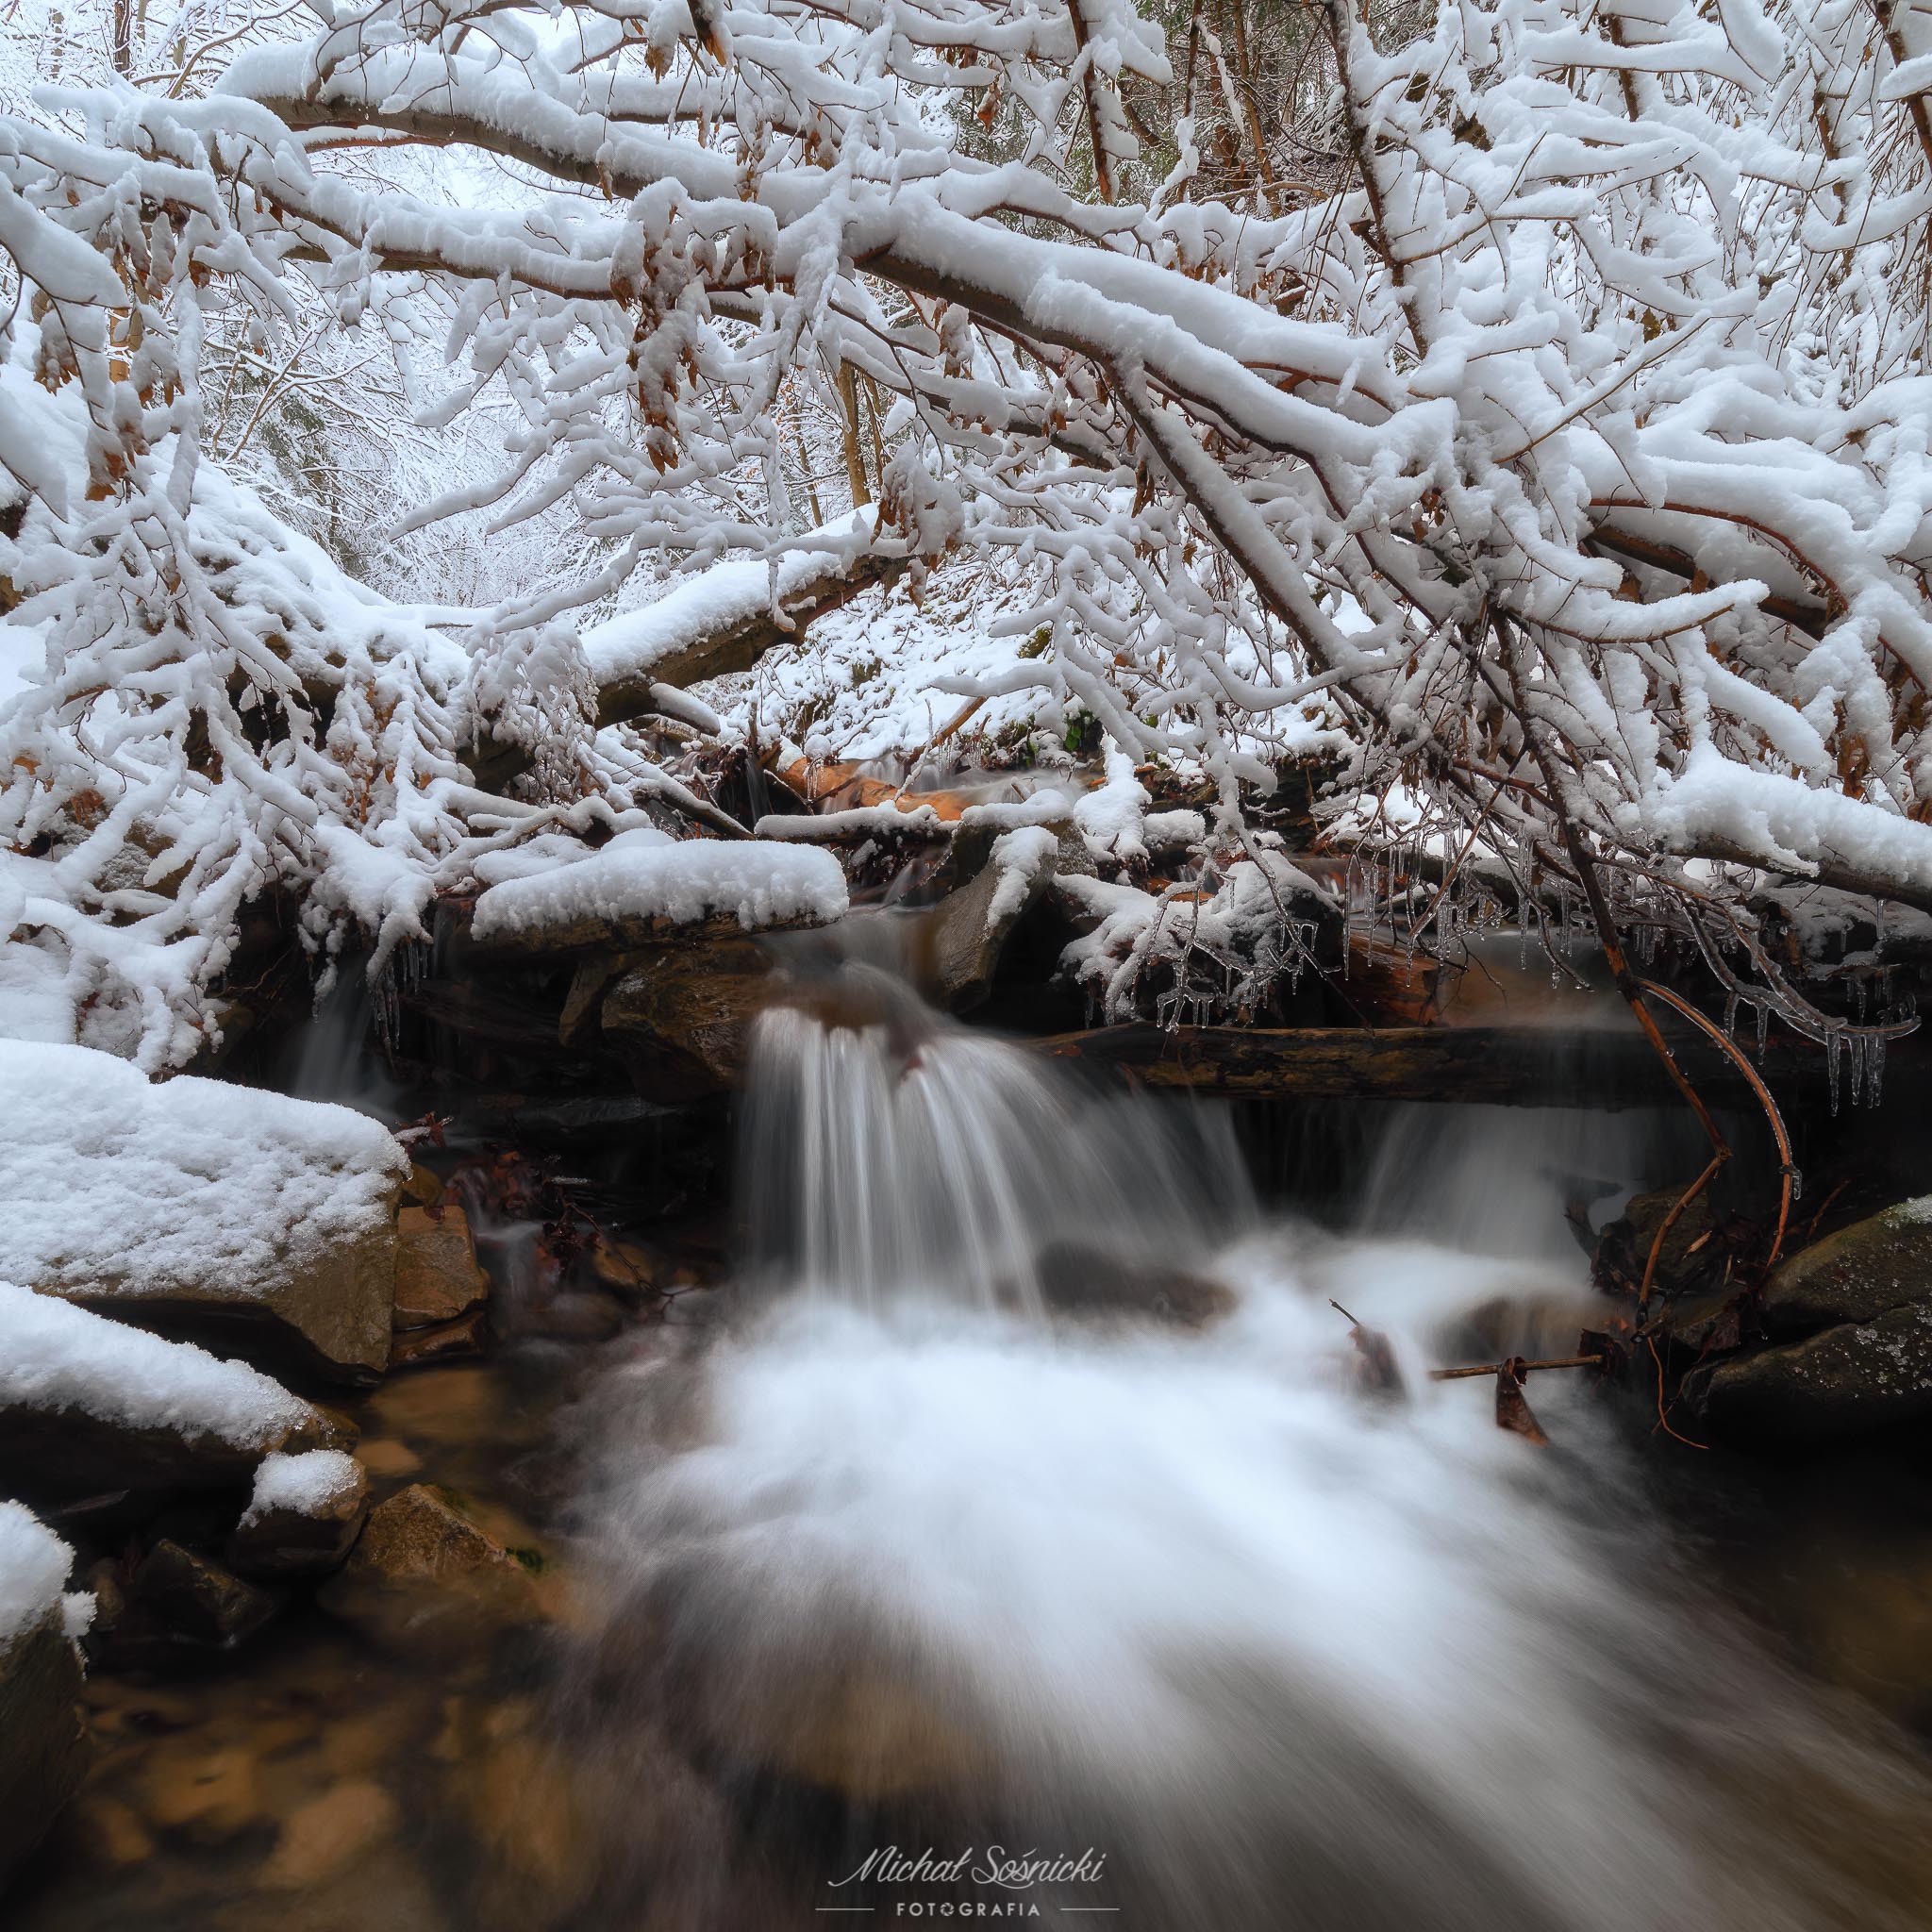 #poland #spring #snow #water #waterfall #river #trees #pentax #benro, Michał Sośnicki